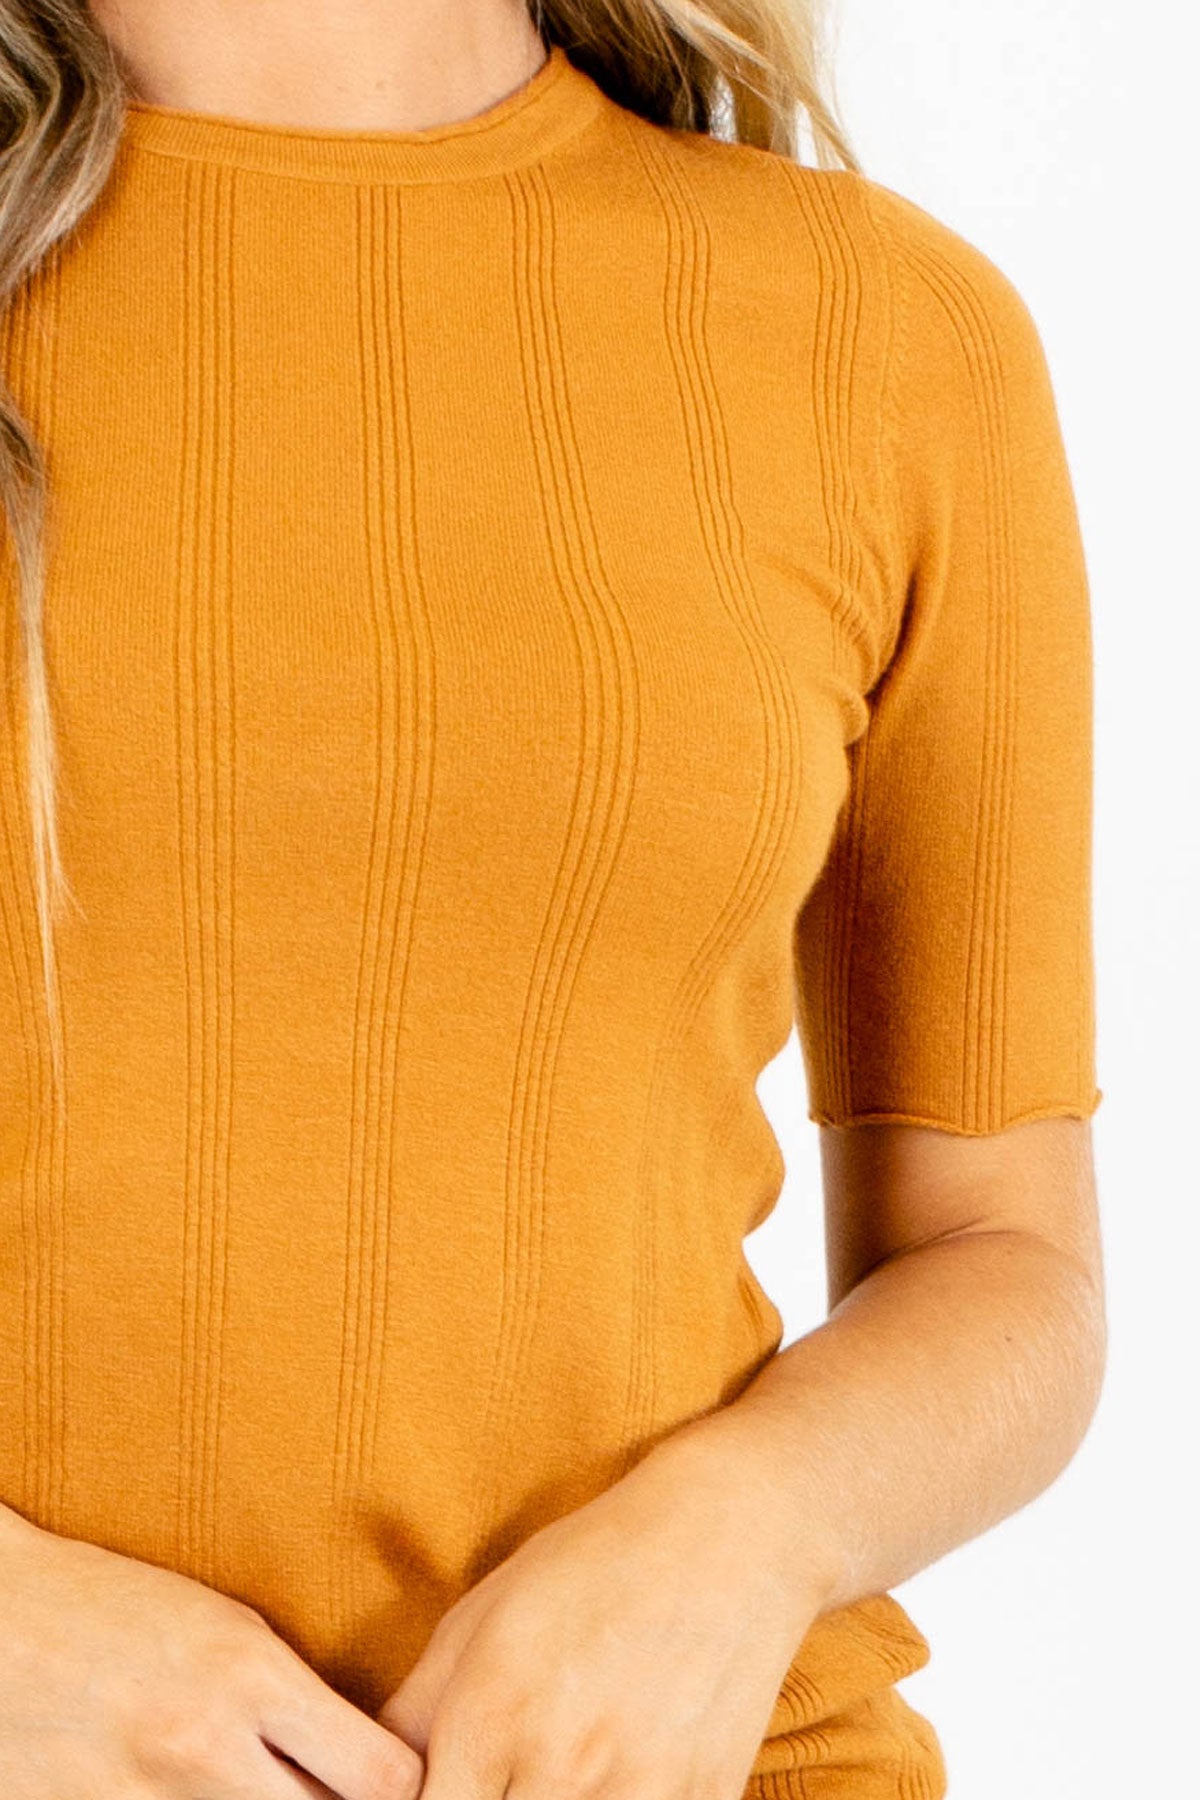 Orange Affordable Online Boutique Clothing for Women